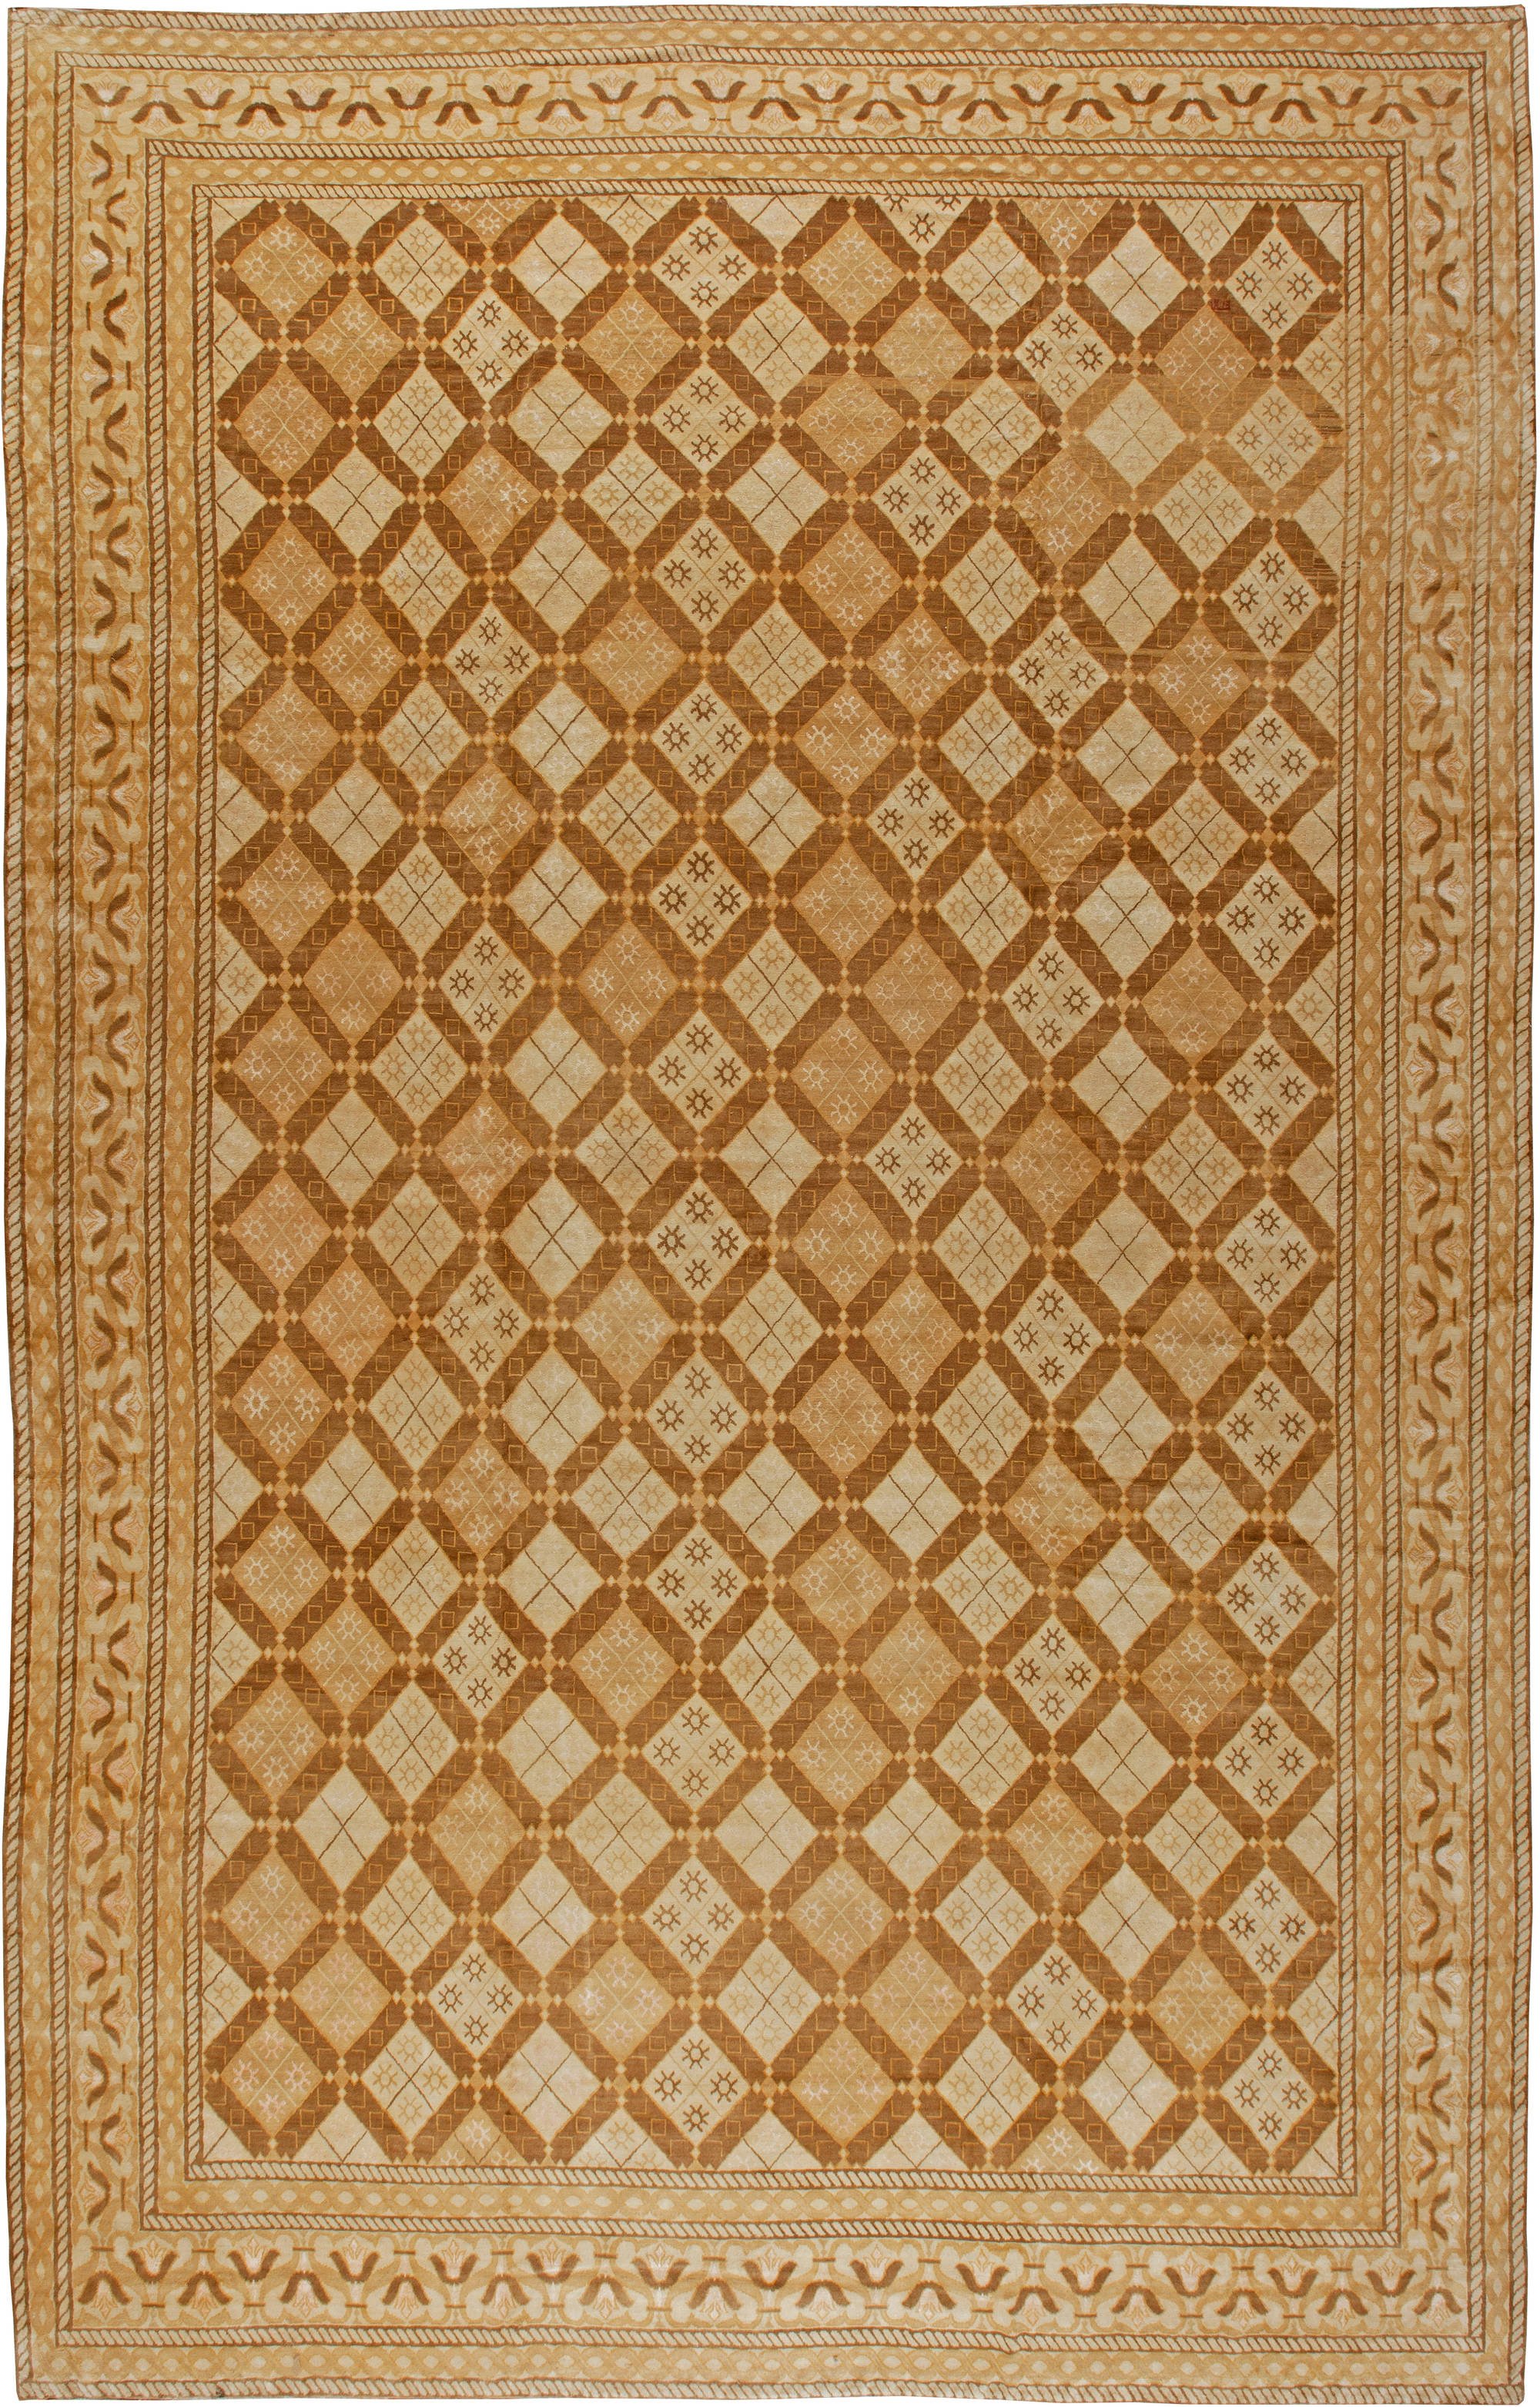 tibetan rugs